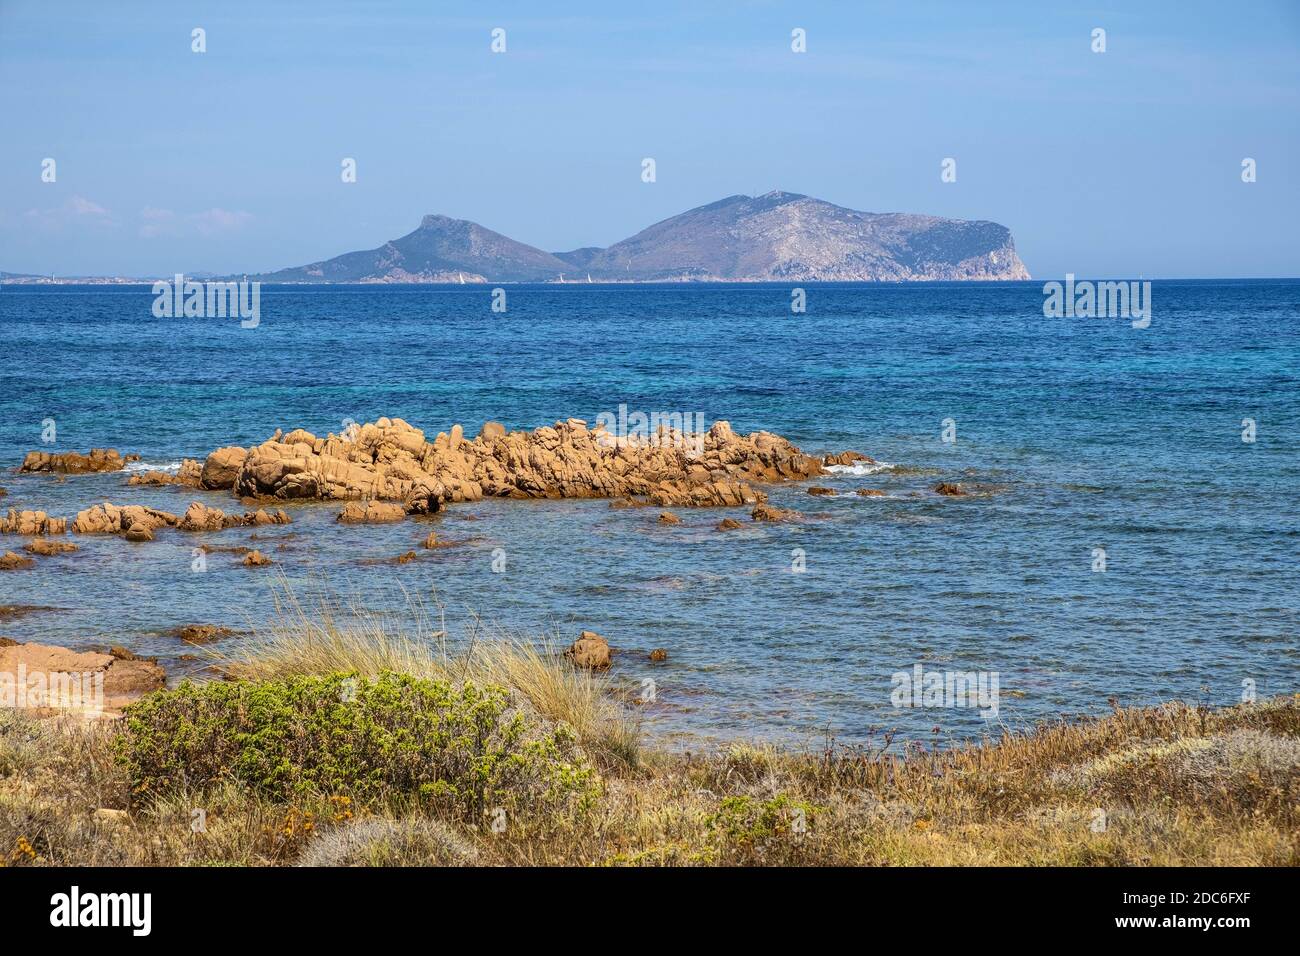 Marine Protected Area natural reserve with seashore rocks of Isola Tavolara island on Tyrrhenian Sea with Capo Figari cape, Monte Ruju peak and Golfo Stock Photo